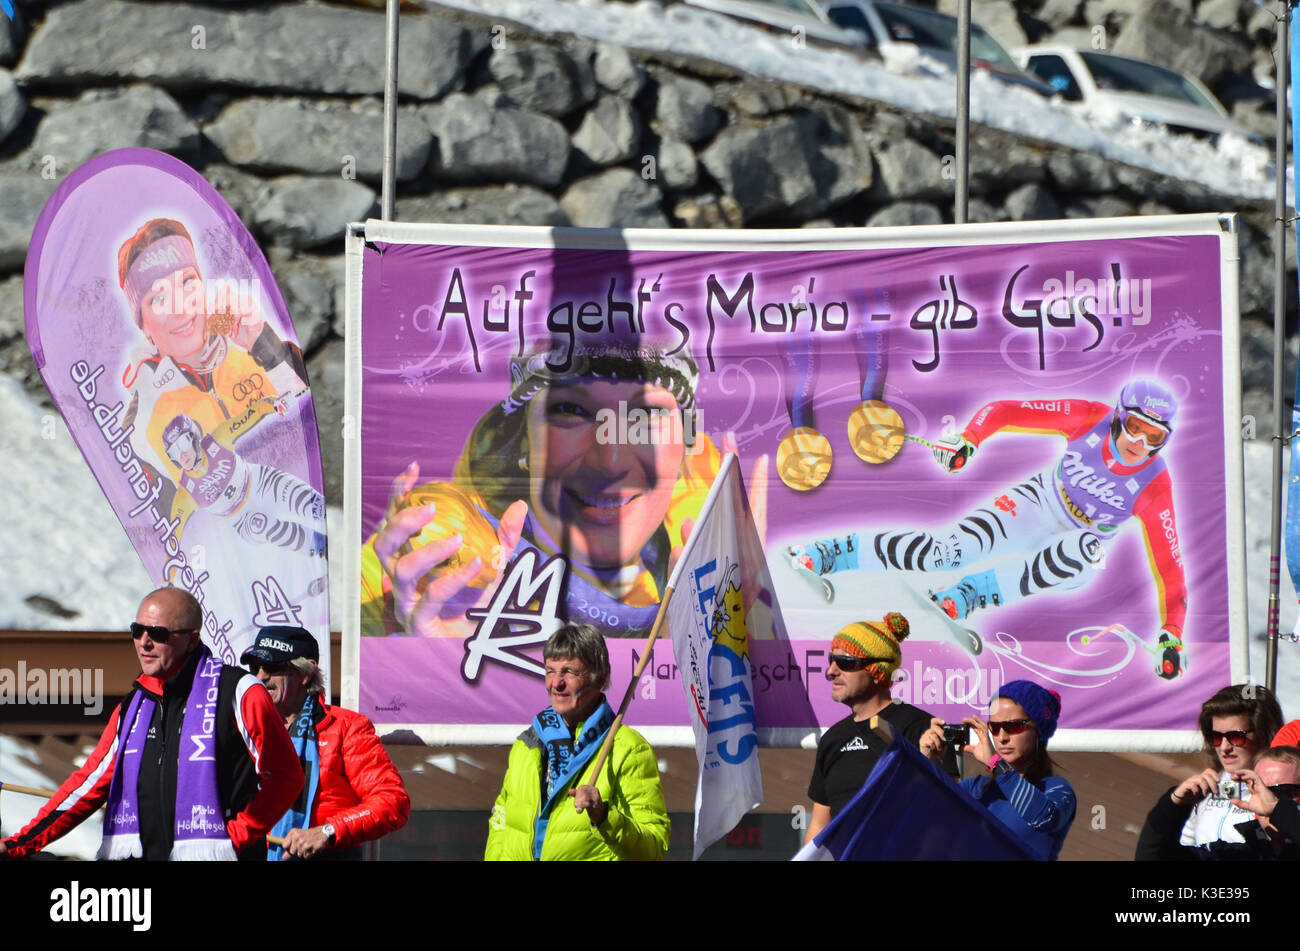 Skiing, ski race, ski world cup, supporters' club, Stock Photo